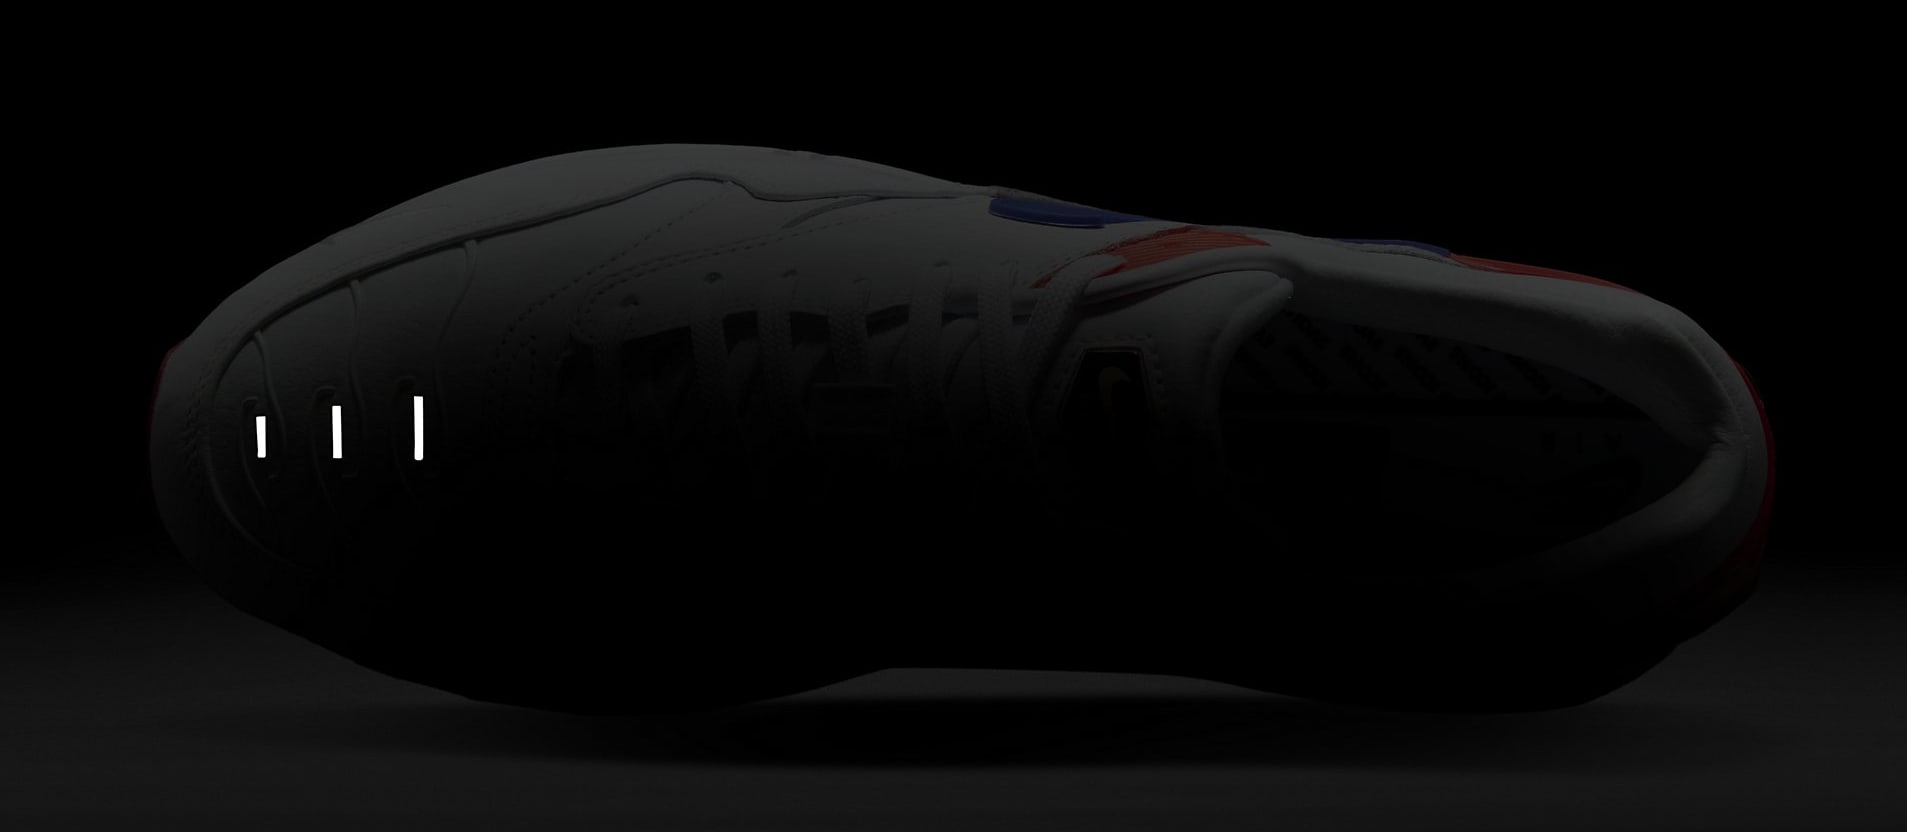 Nike Air Max 1 'Evolutions of Icons' CW6541-100 3M